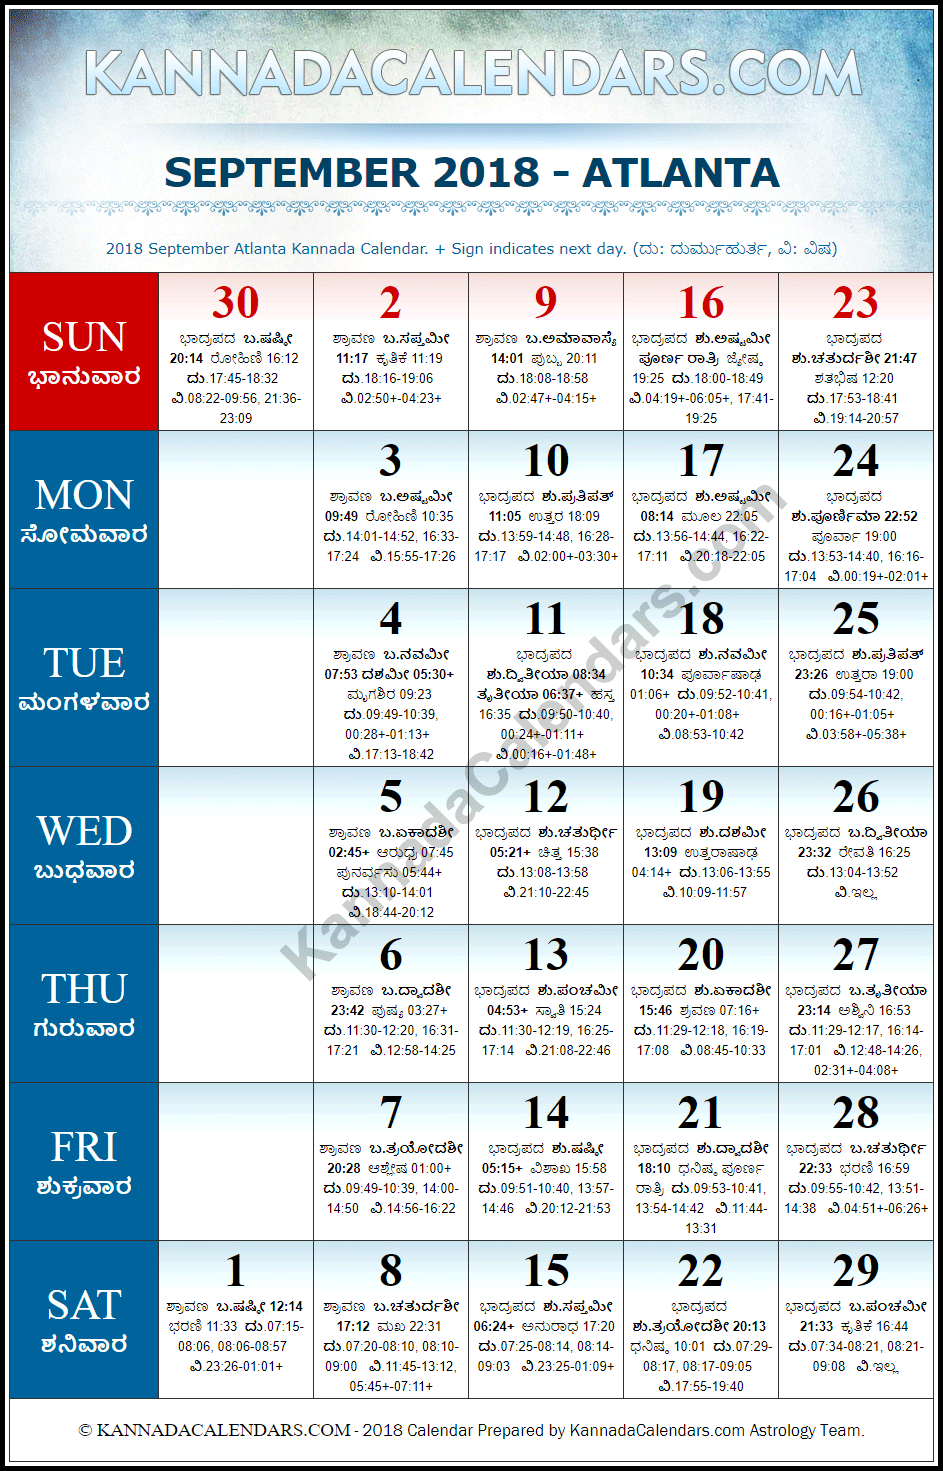 September 2018 Kannada Calendar for Atlanta, USA